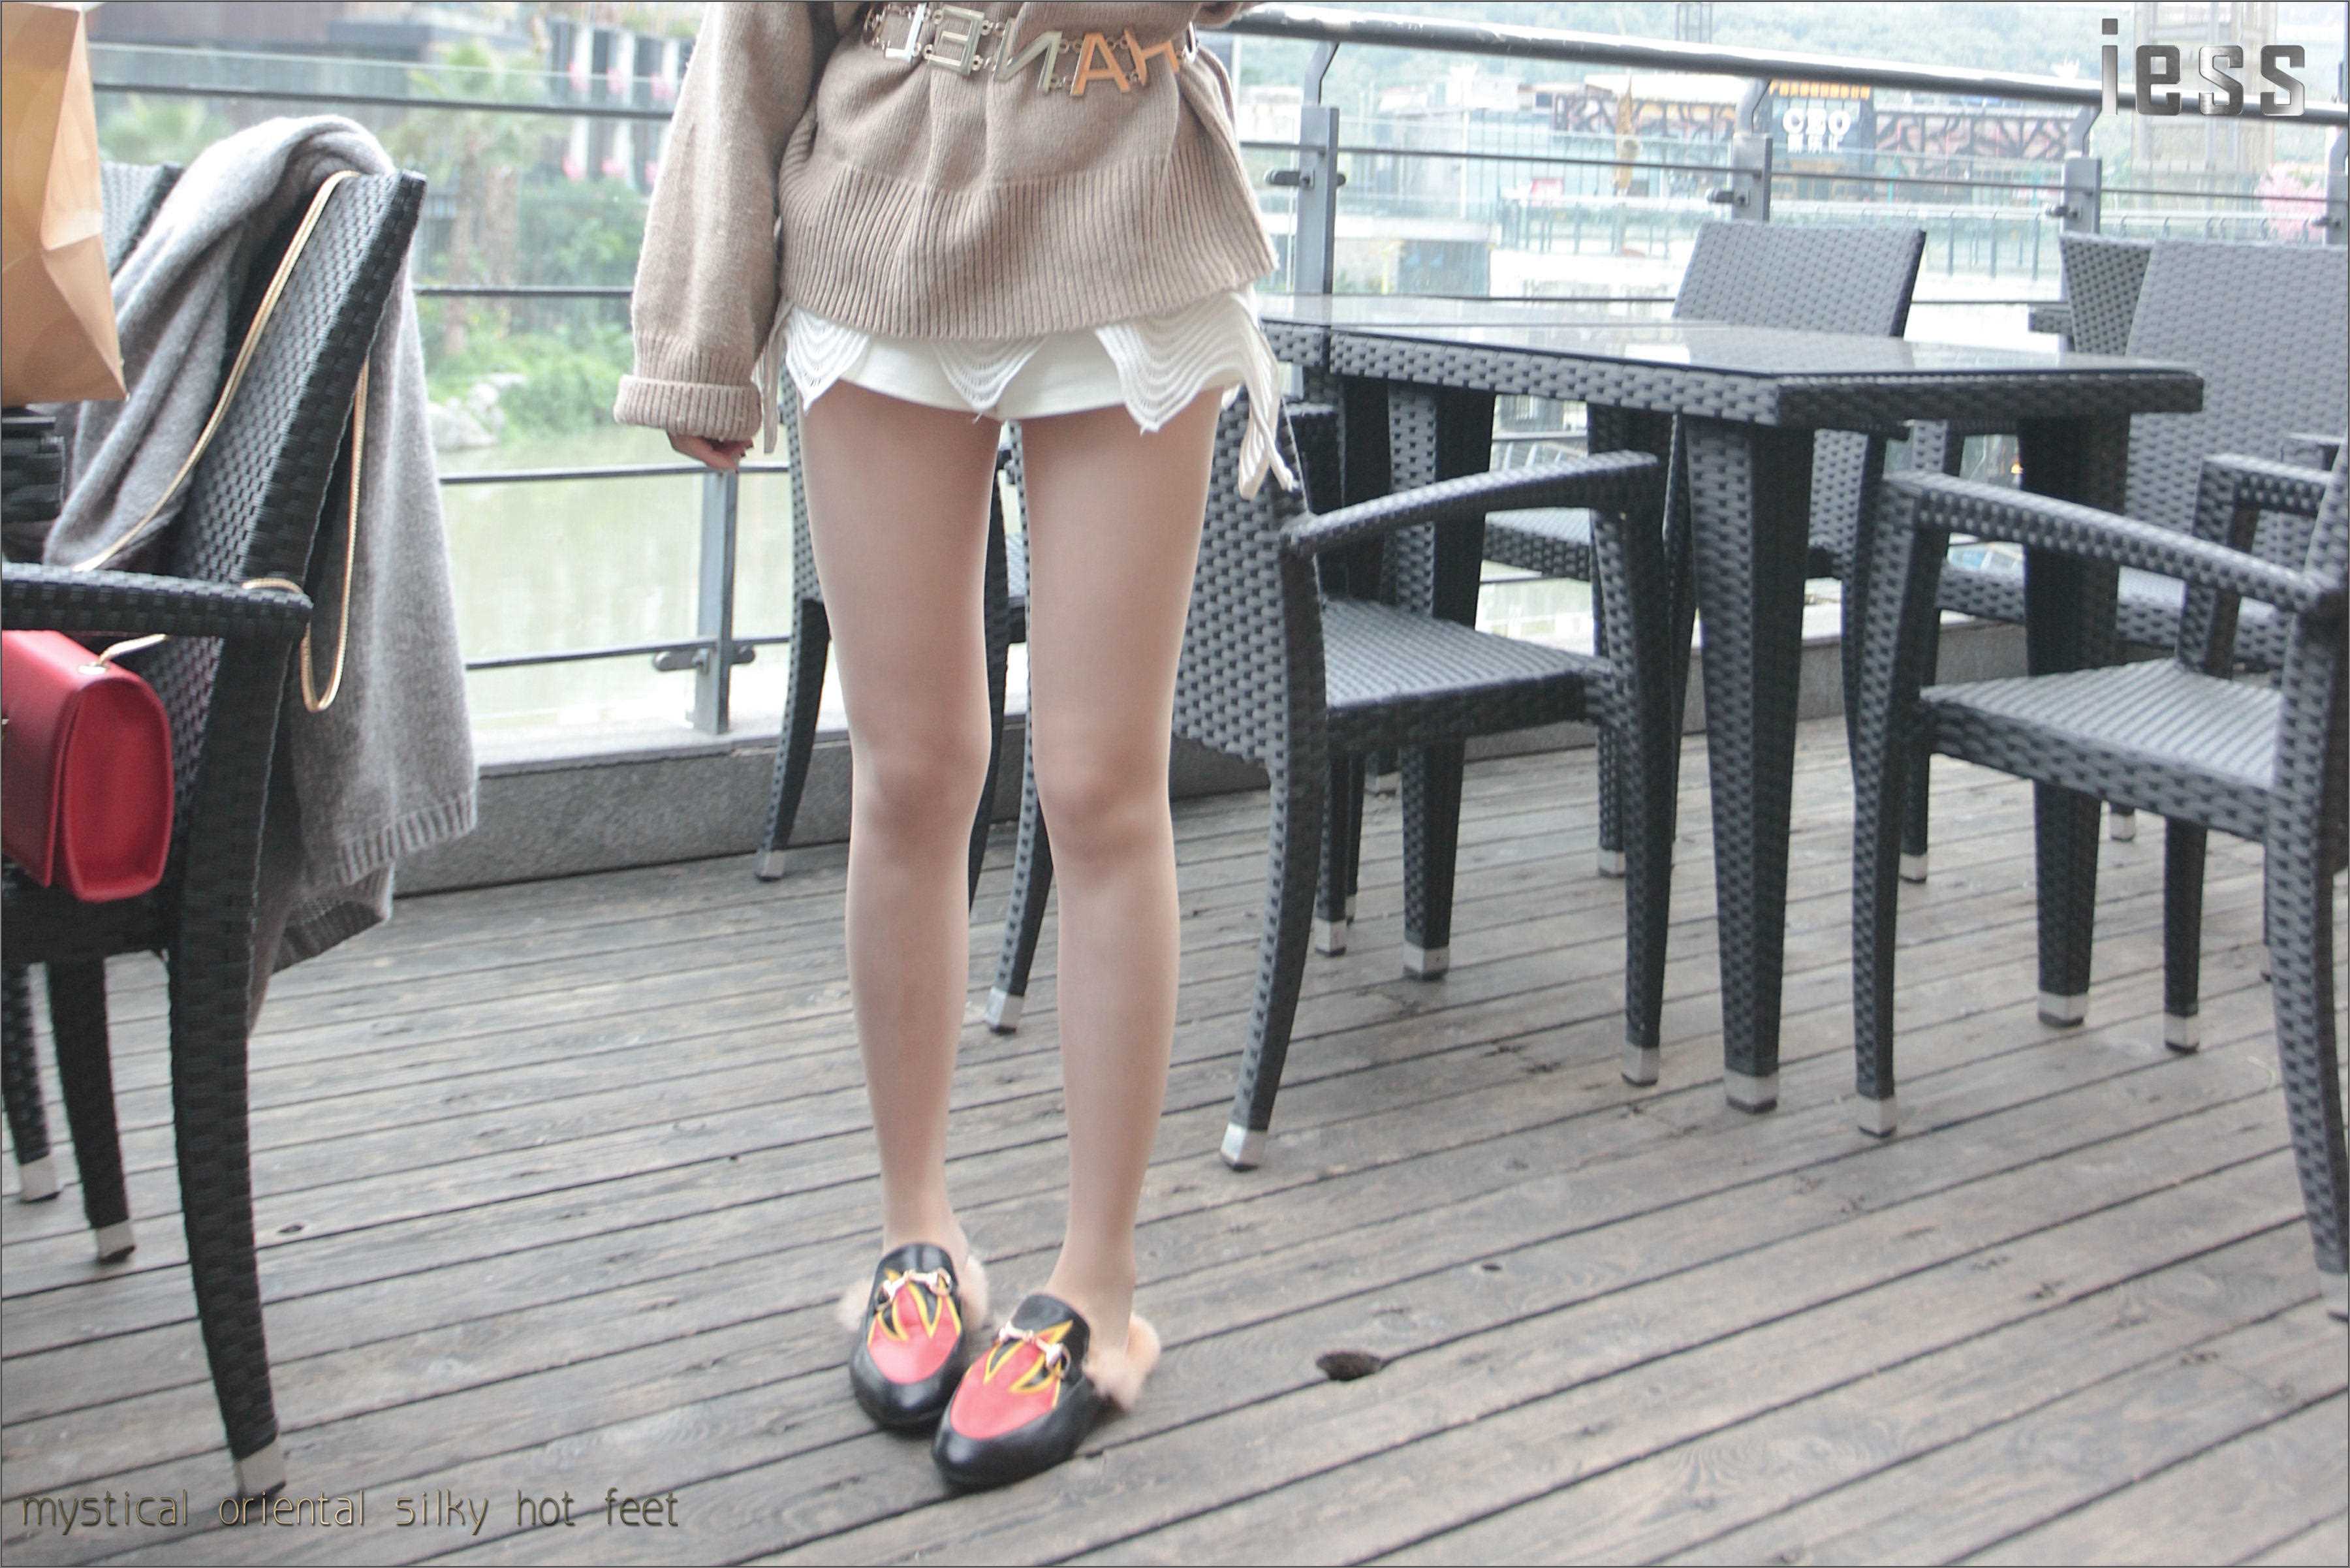 China Beauty Legs and feet 138